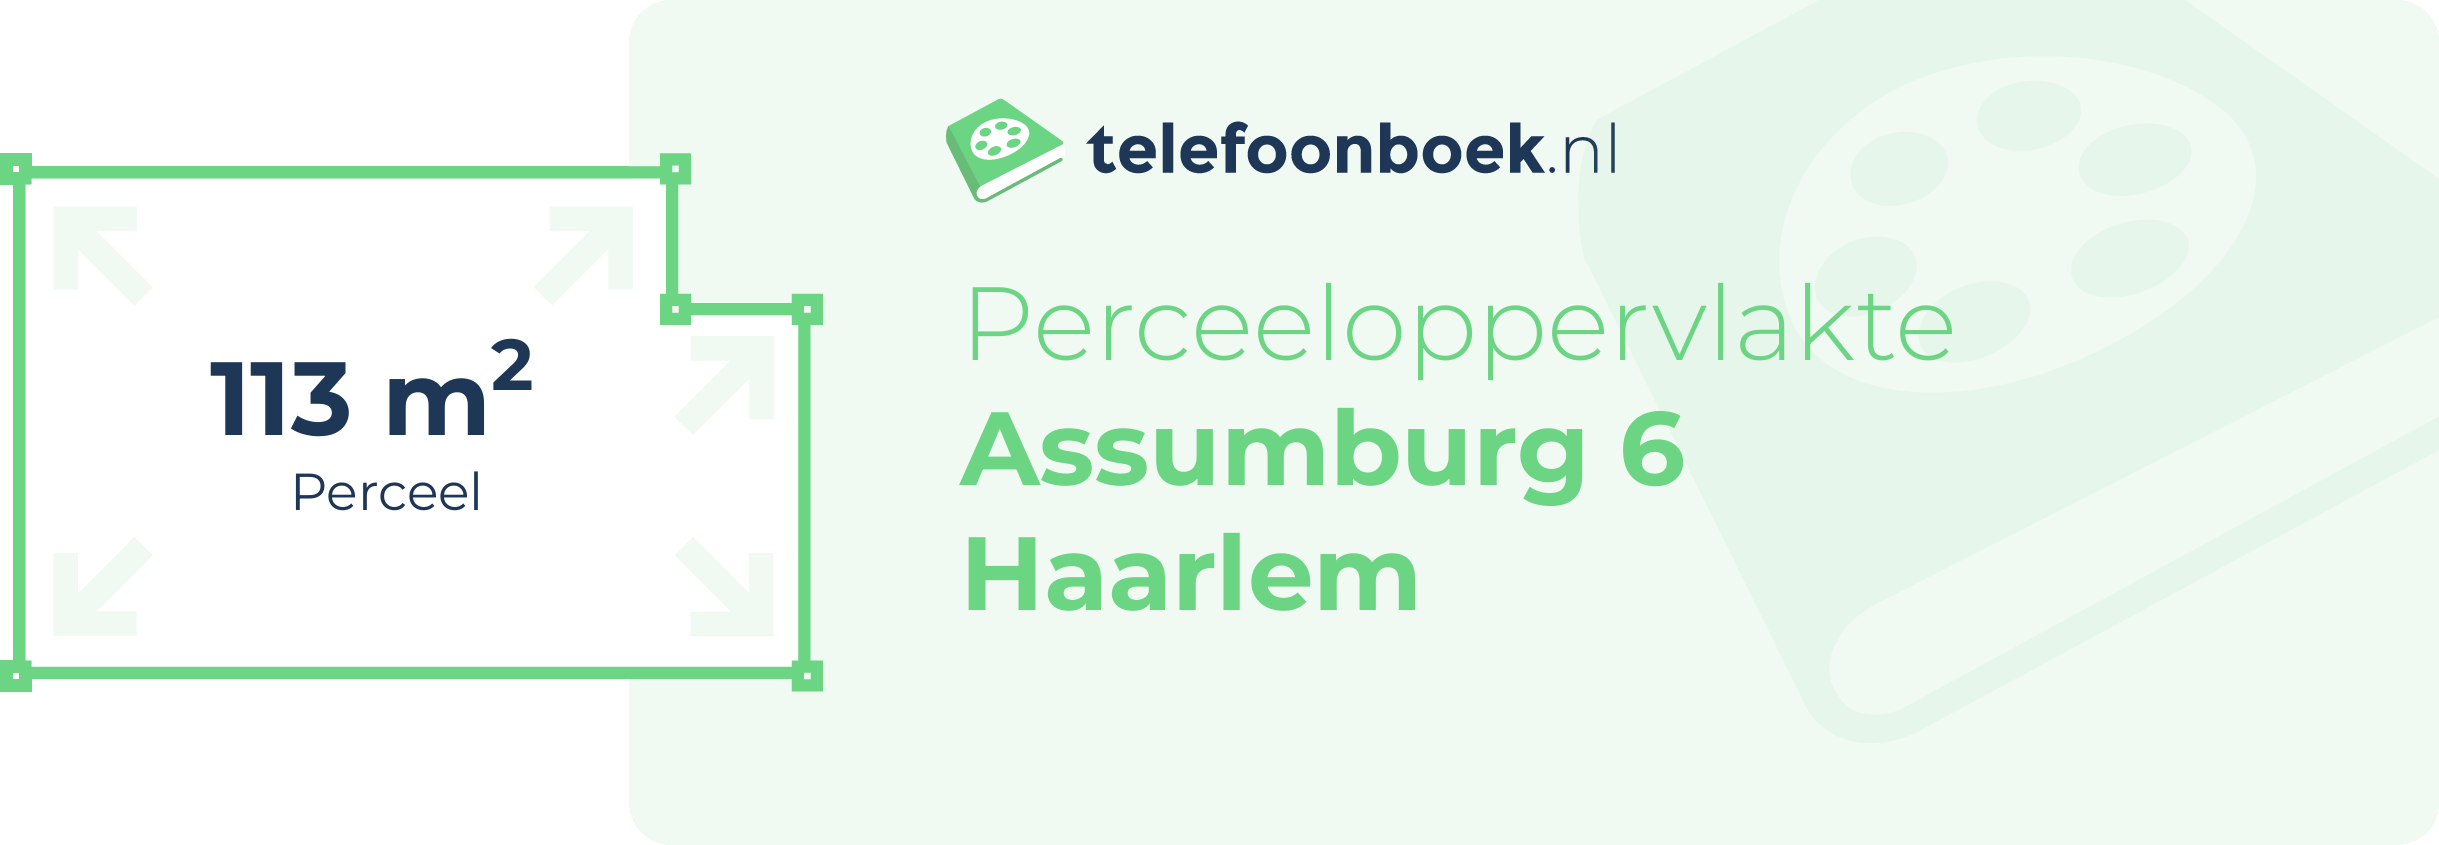 Perceeloppervlakte Assumburg 6 Haarlem